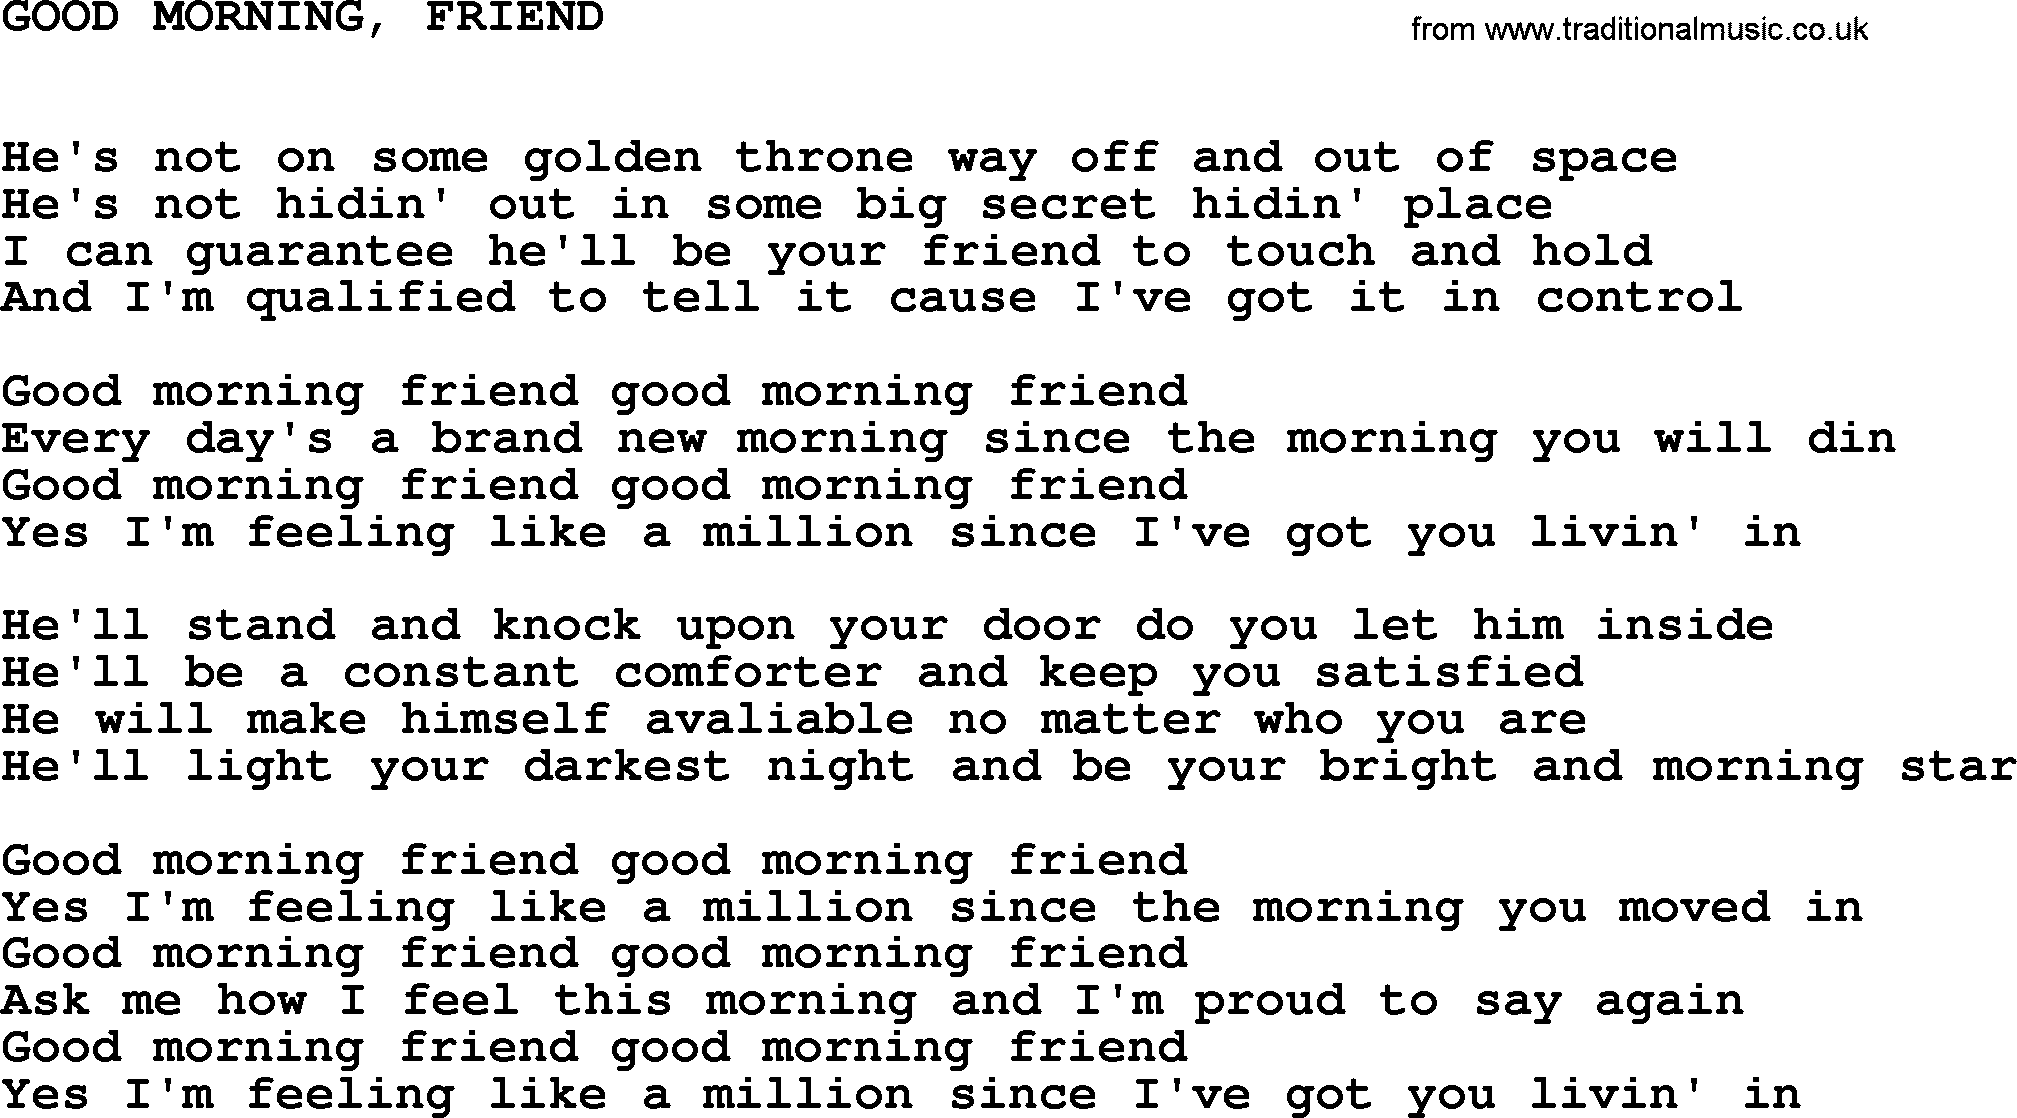 Johnny Cash song Good Morning, Friend.txt lyrics